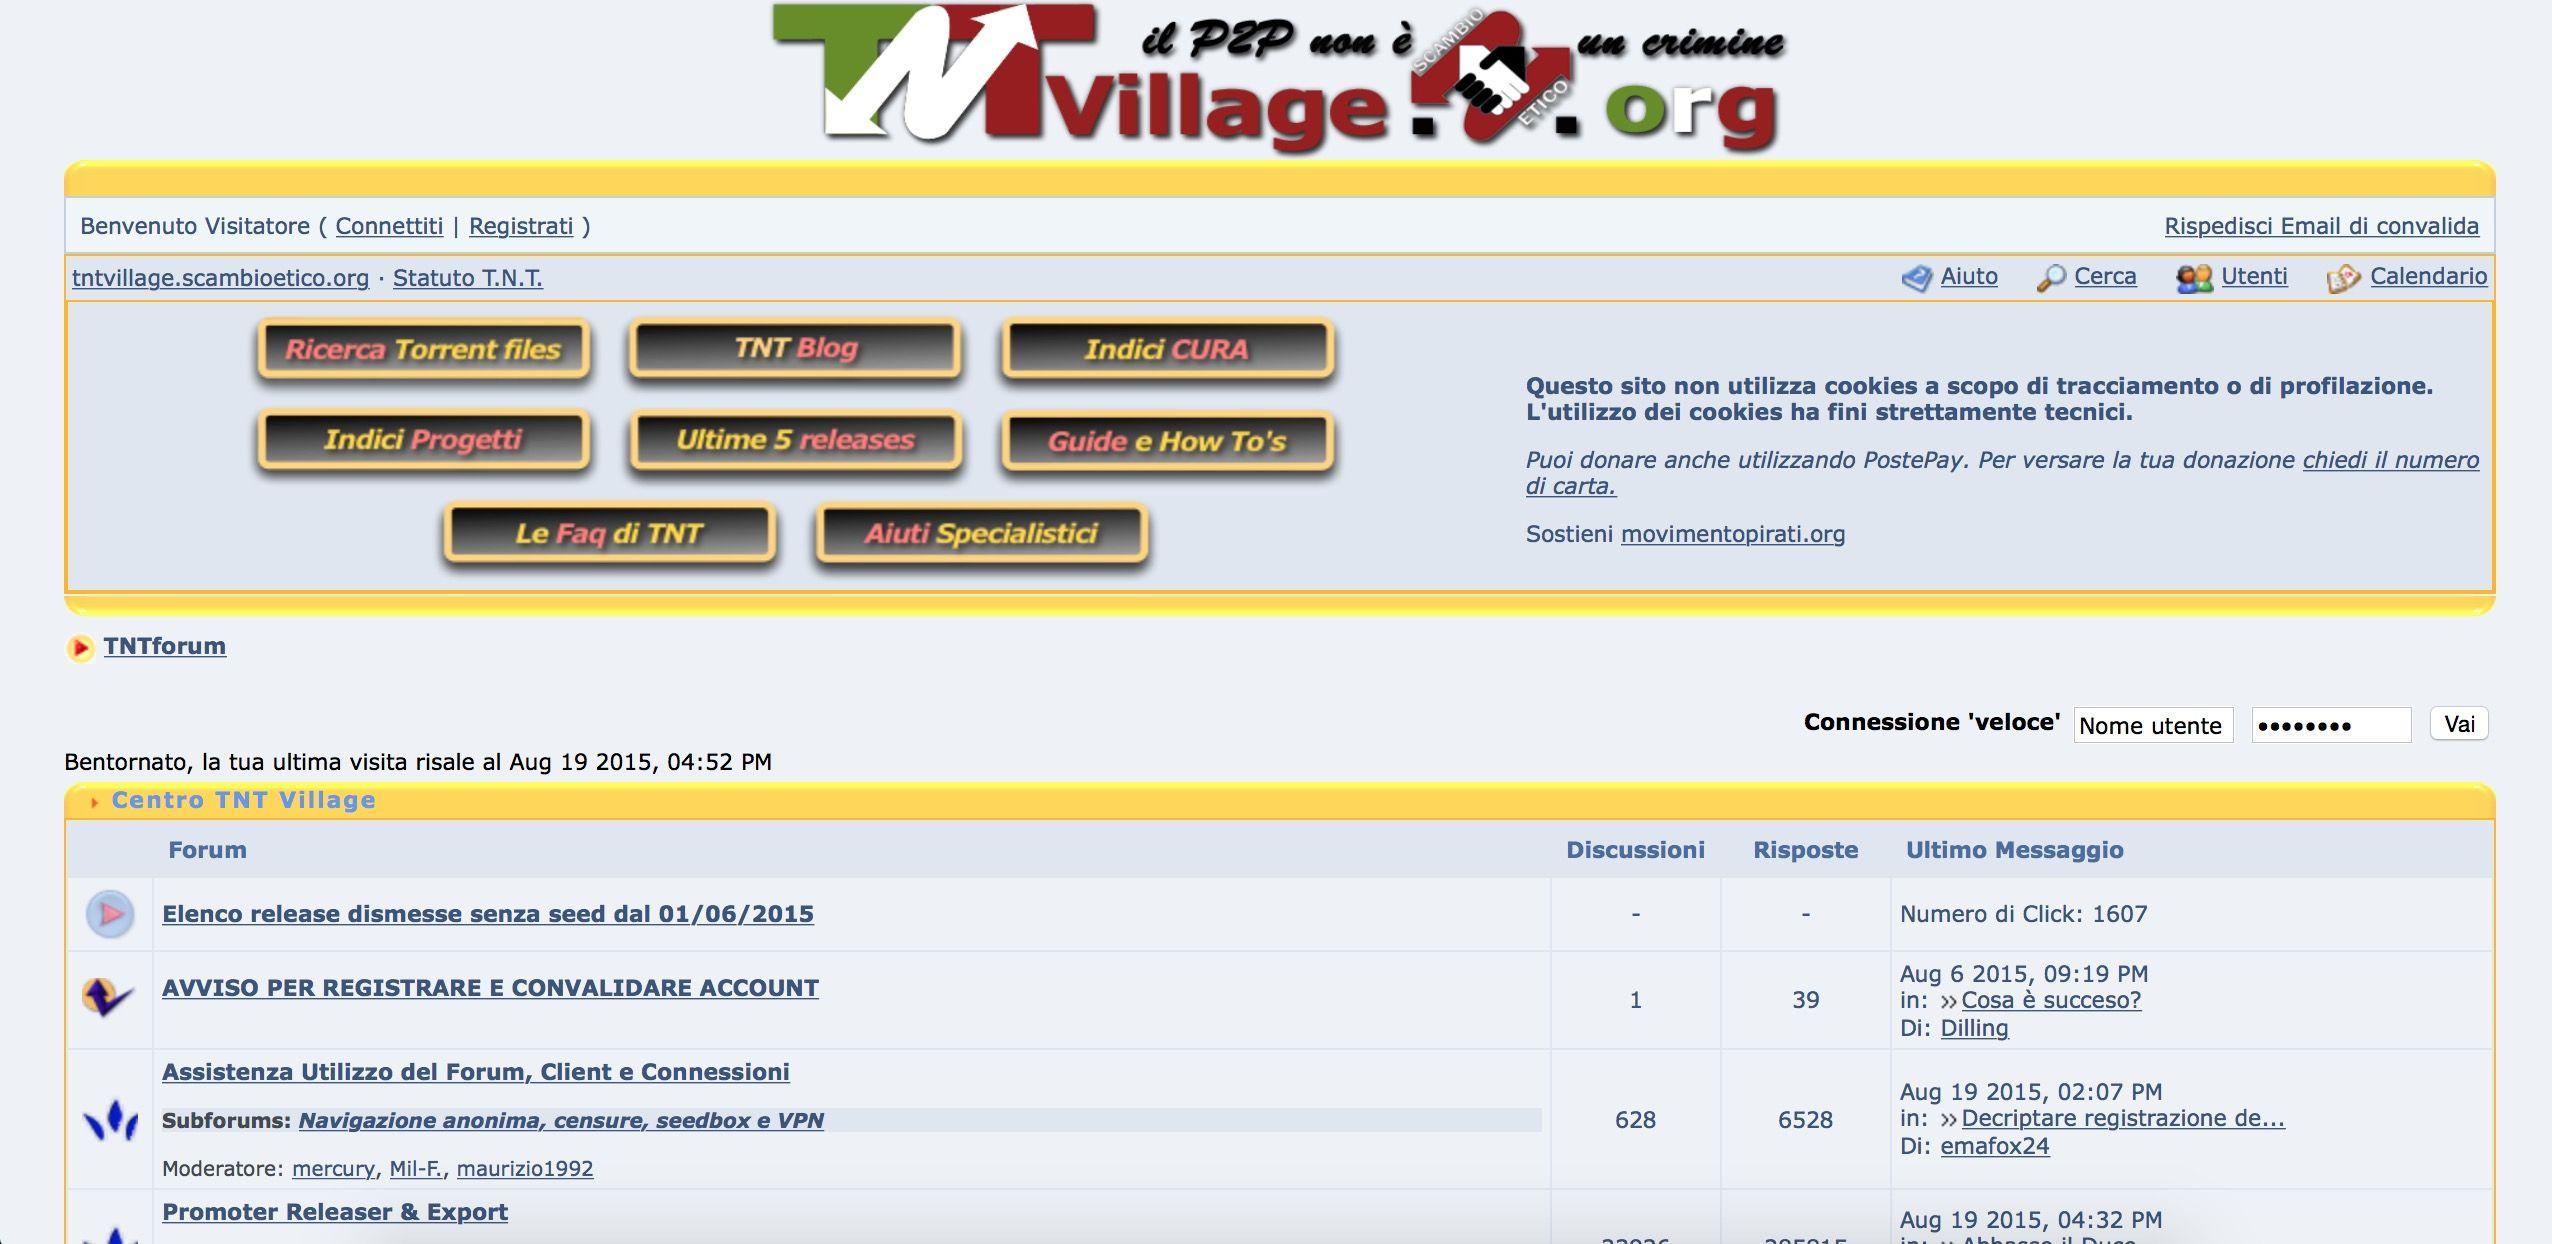 tnt village download e-books torrent